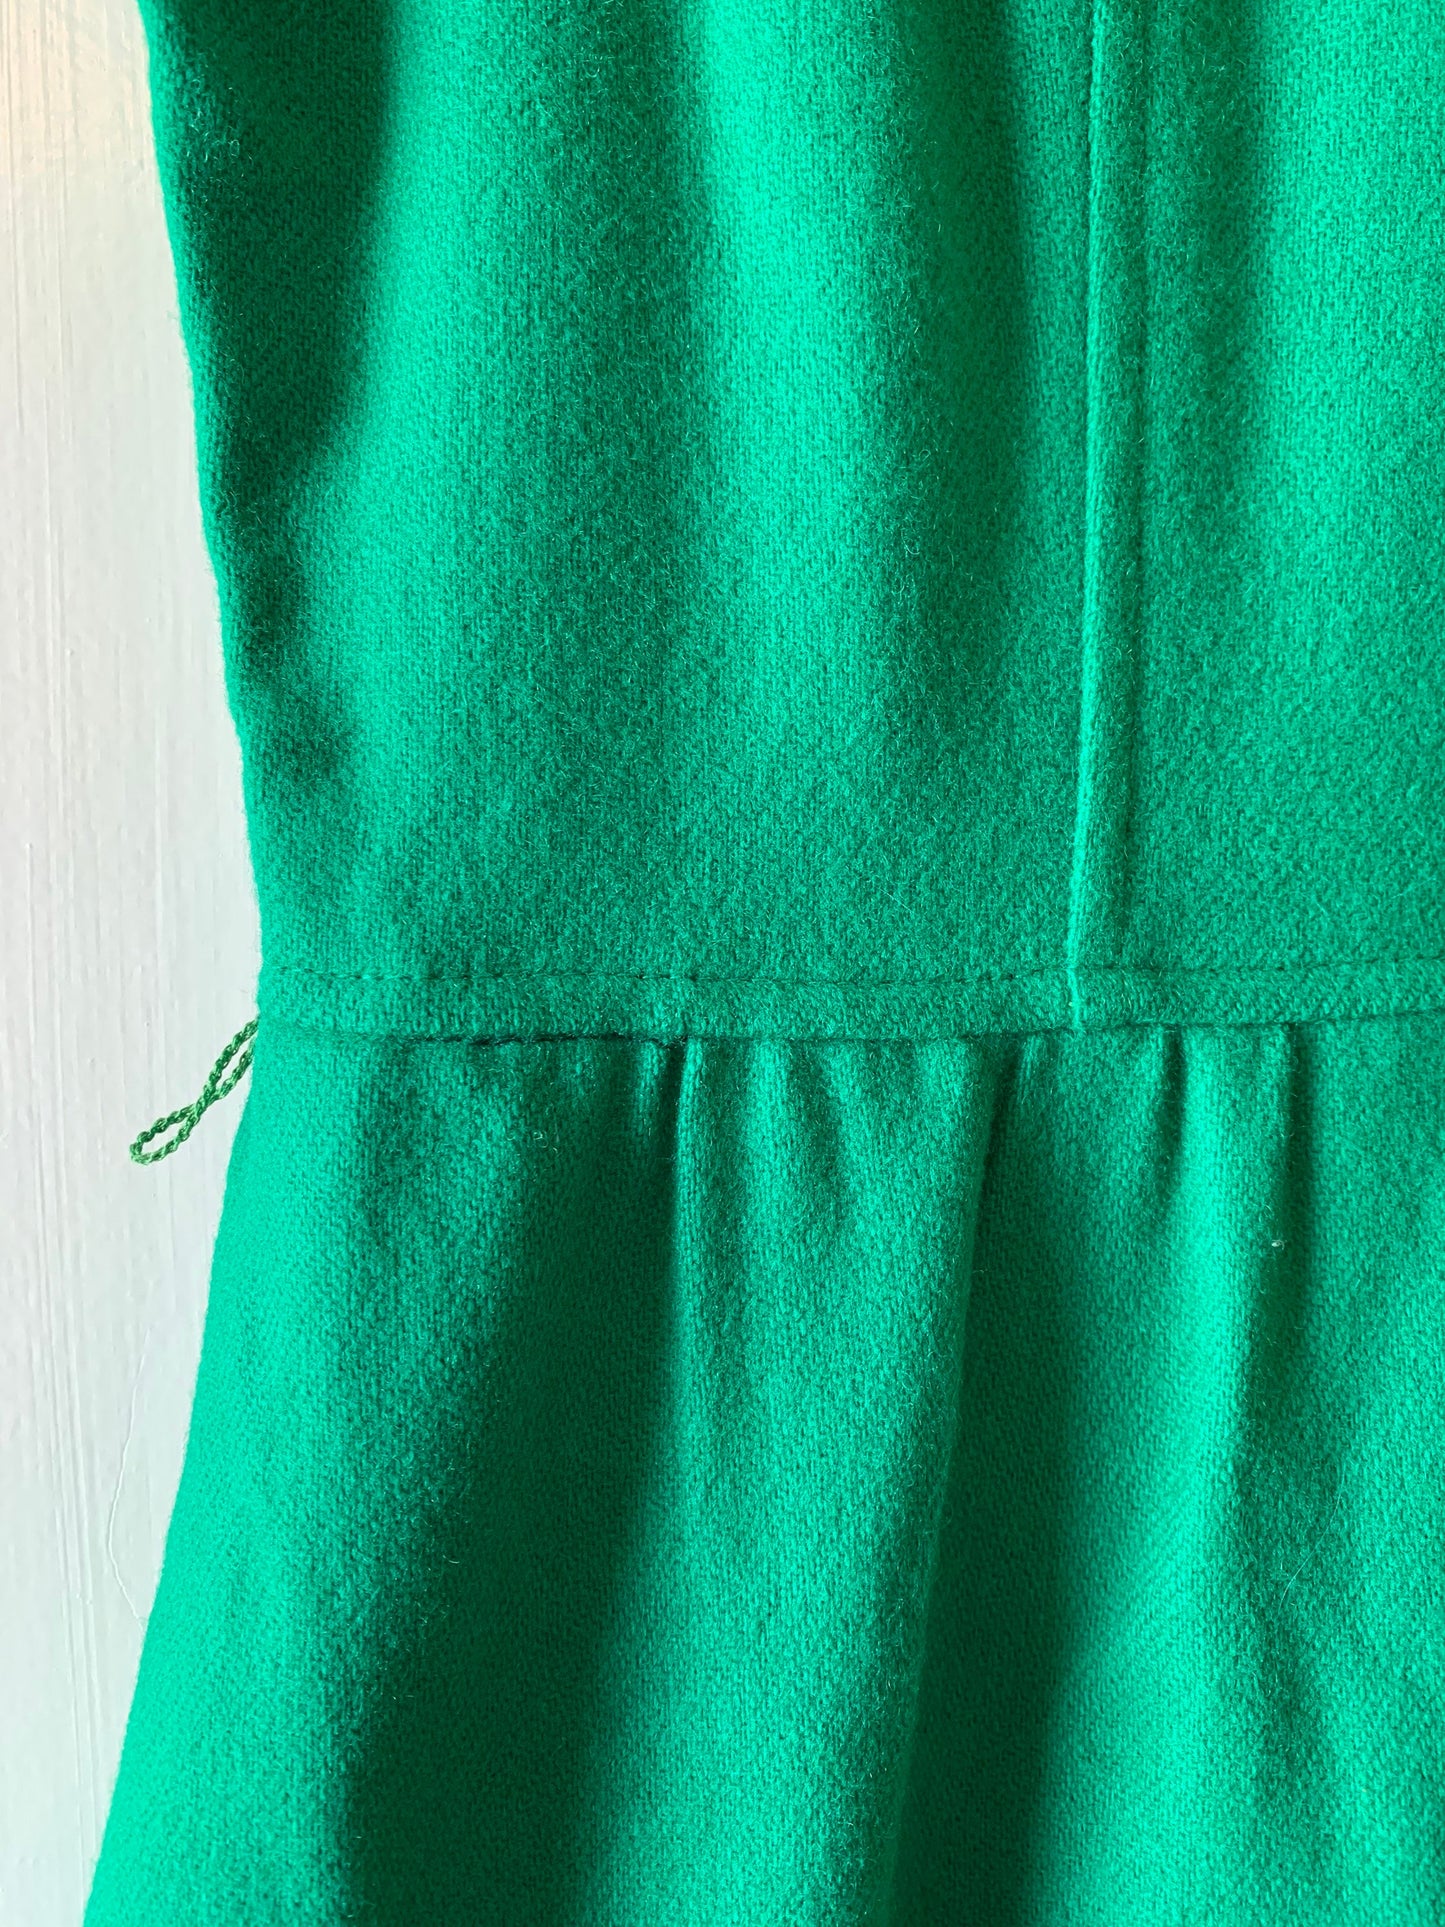 Vintage 1960's Emerald Dress